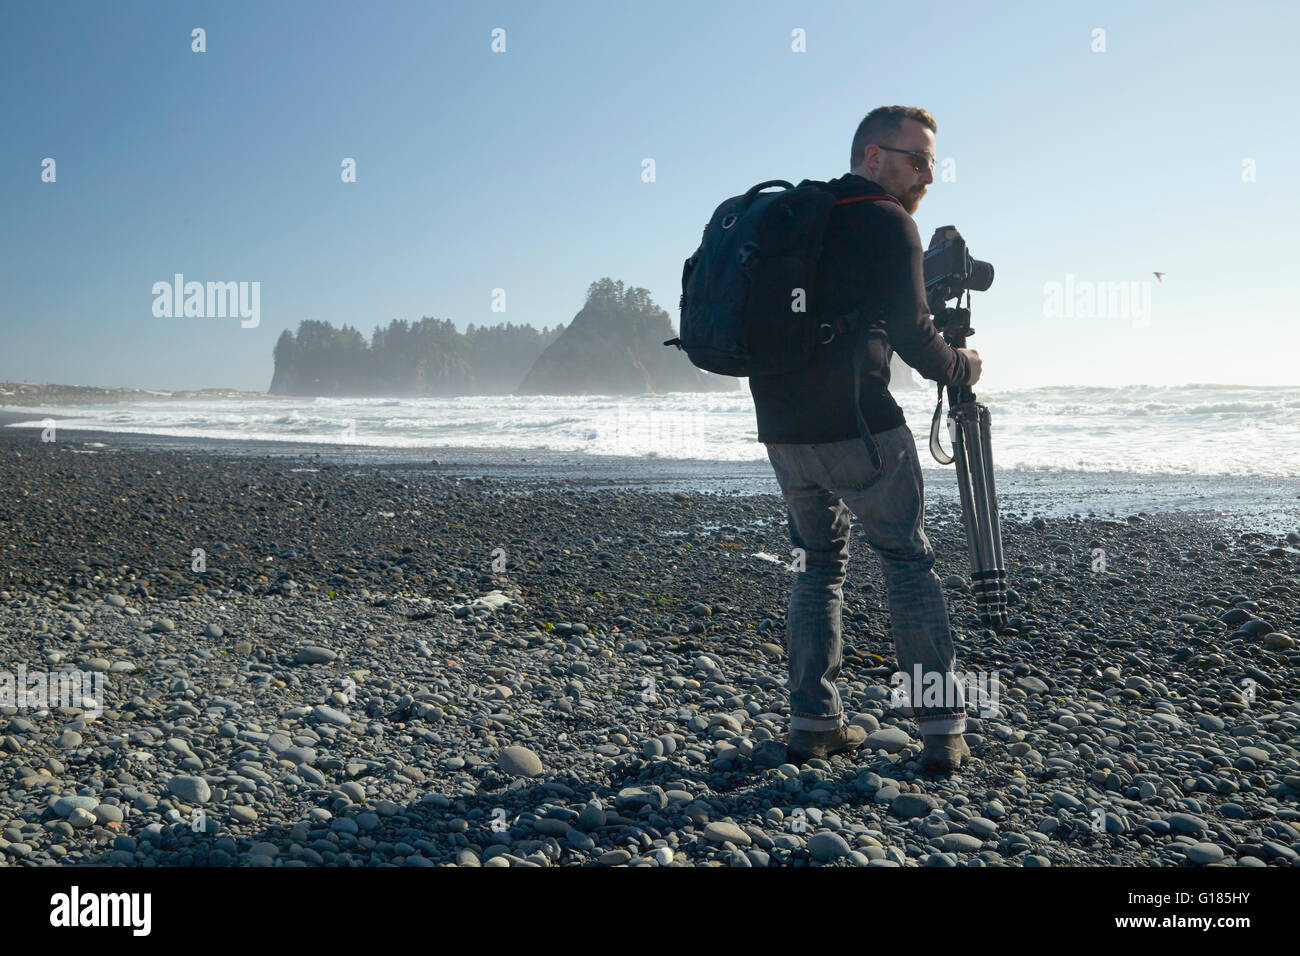 Male photographer on beach carrying camera and tripod, Rialto Beach, Washington State, USA Stock Photo